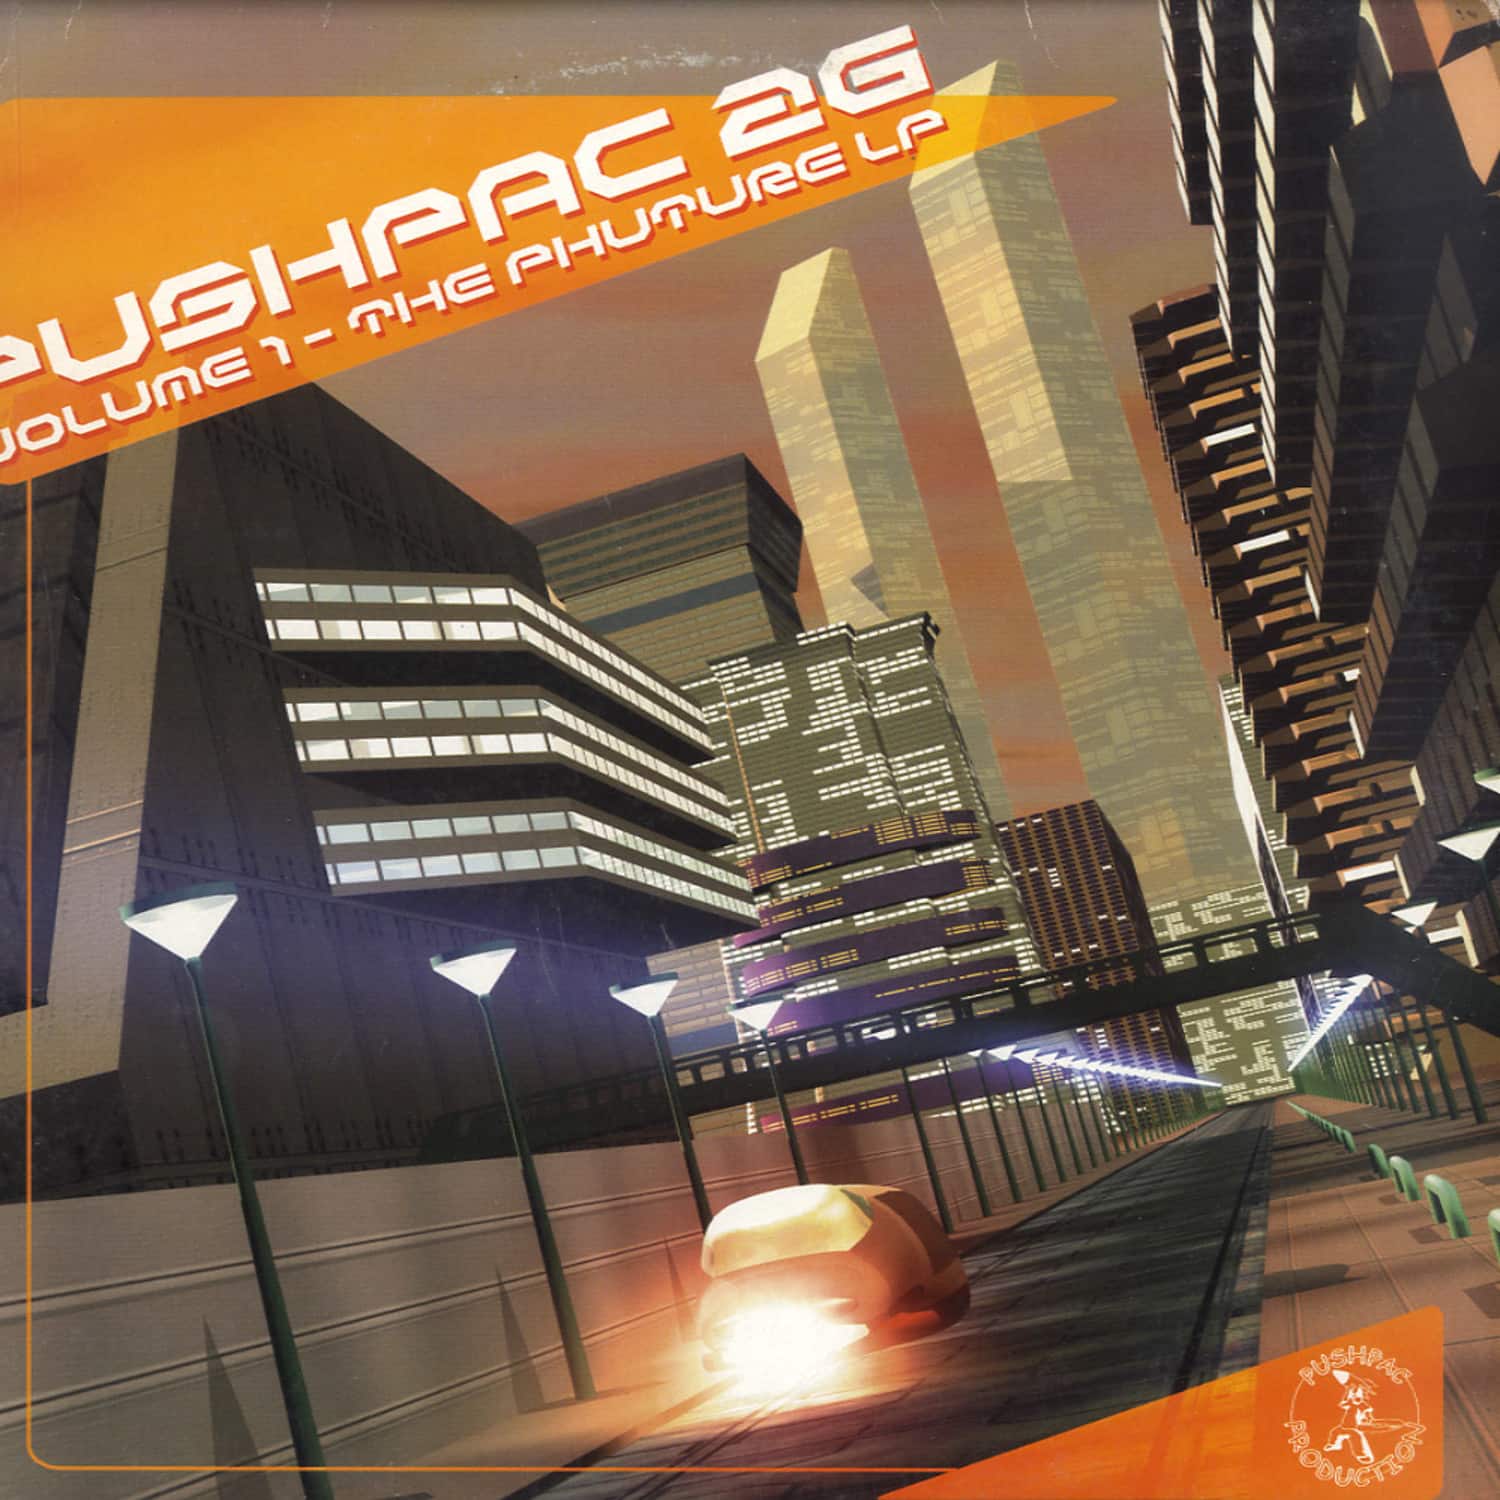 Pushpac - PUSHPAC 2G VOLUME ONE - THE PHUTURE LP 